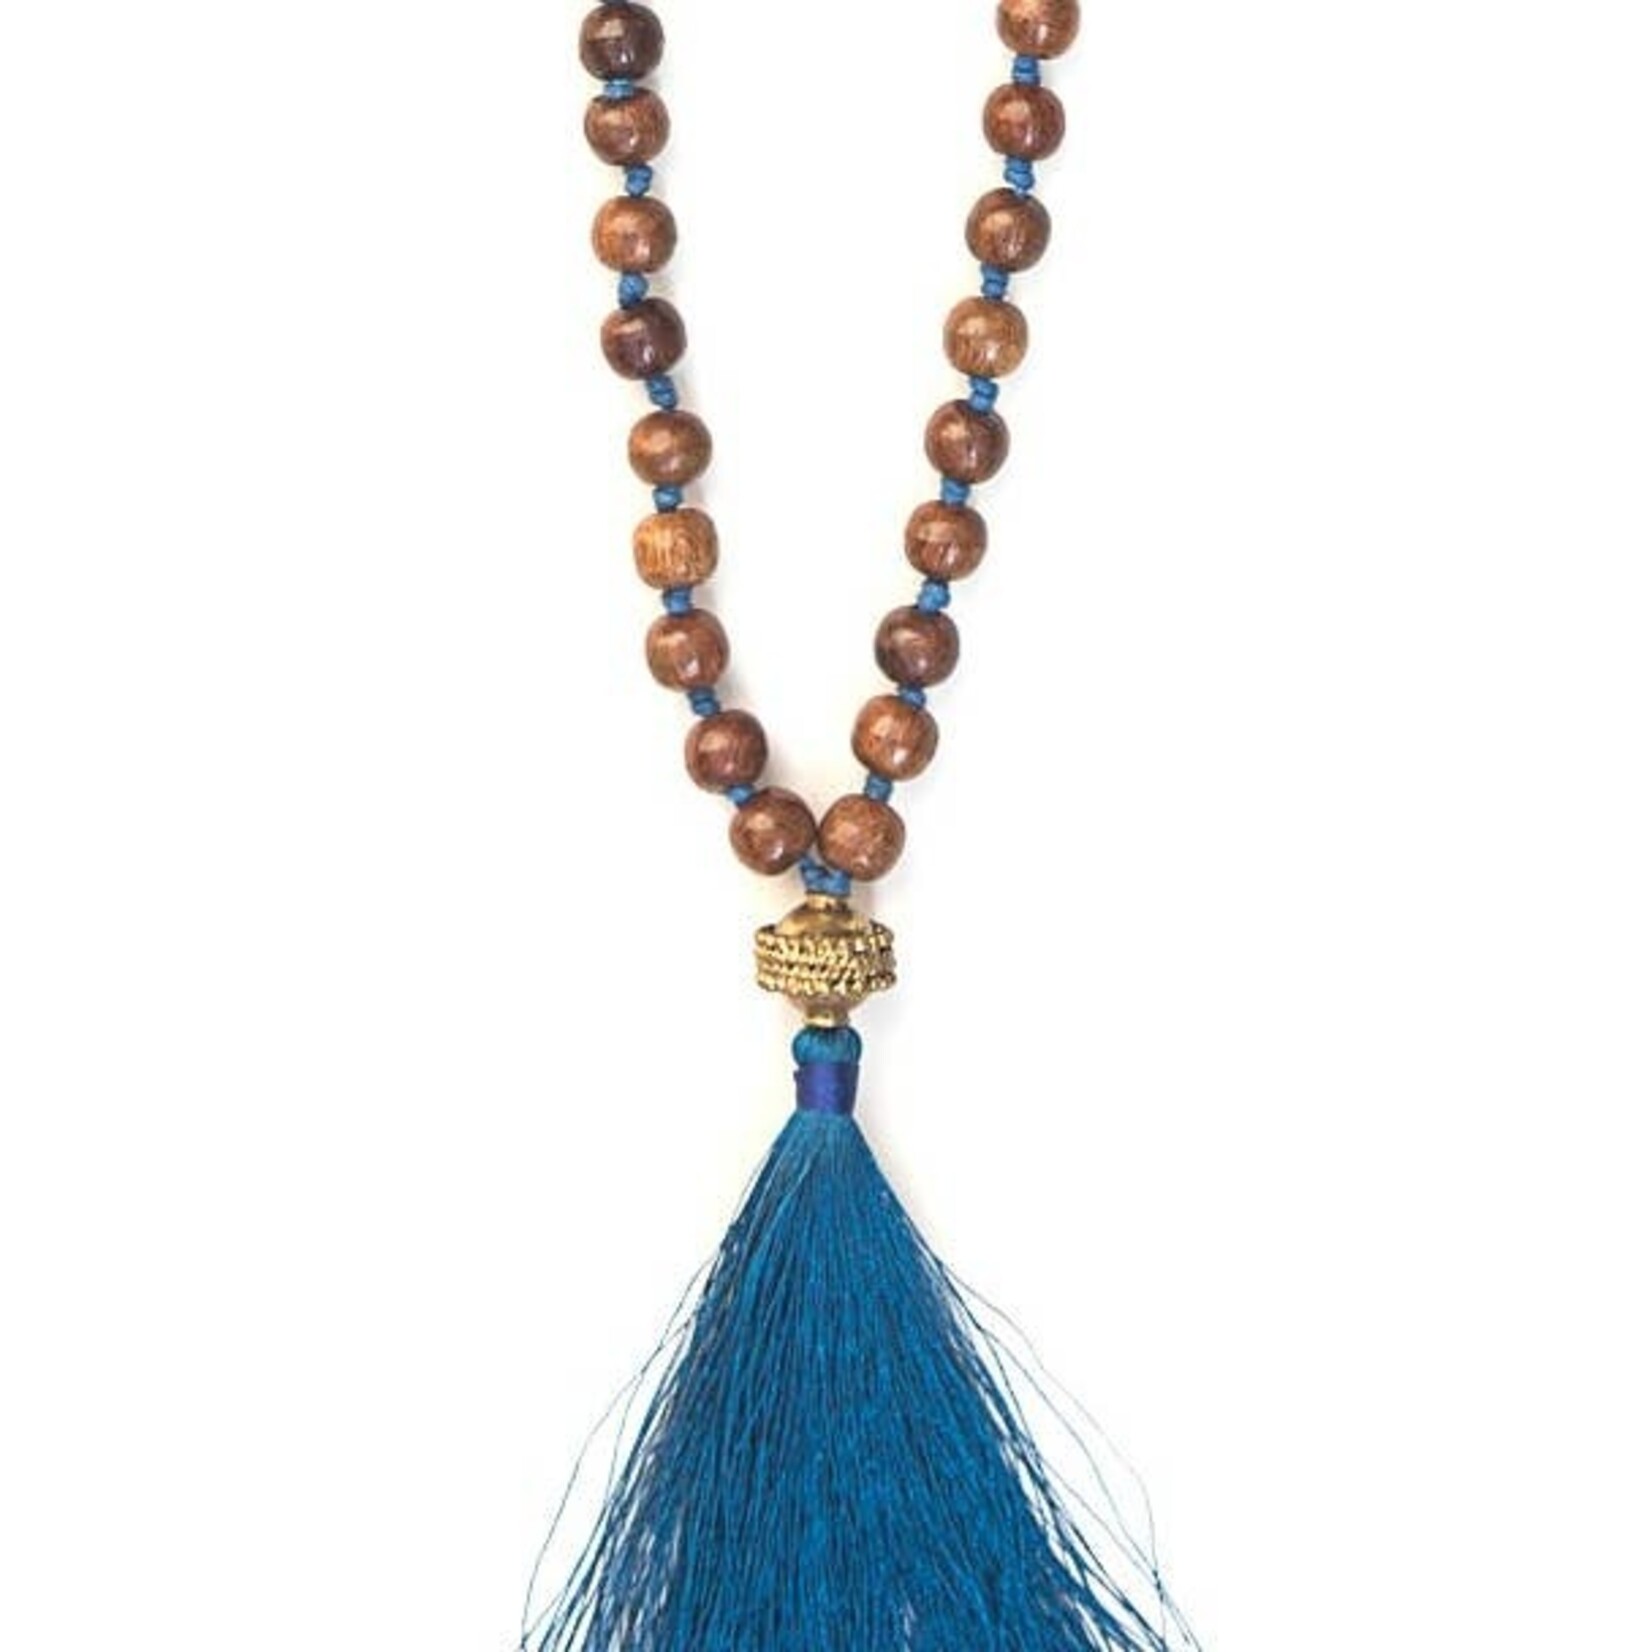 Fair Anita Wooden Warrior Tassel Necklace, India